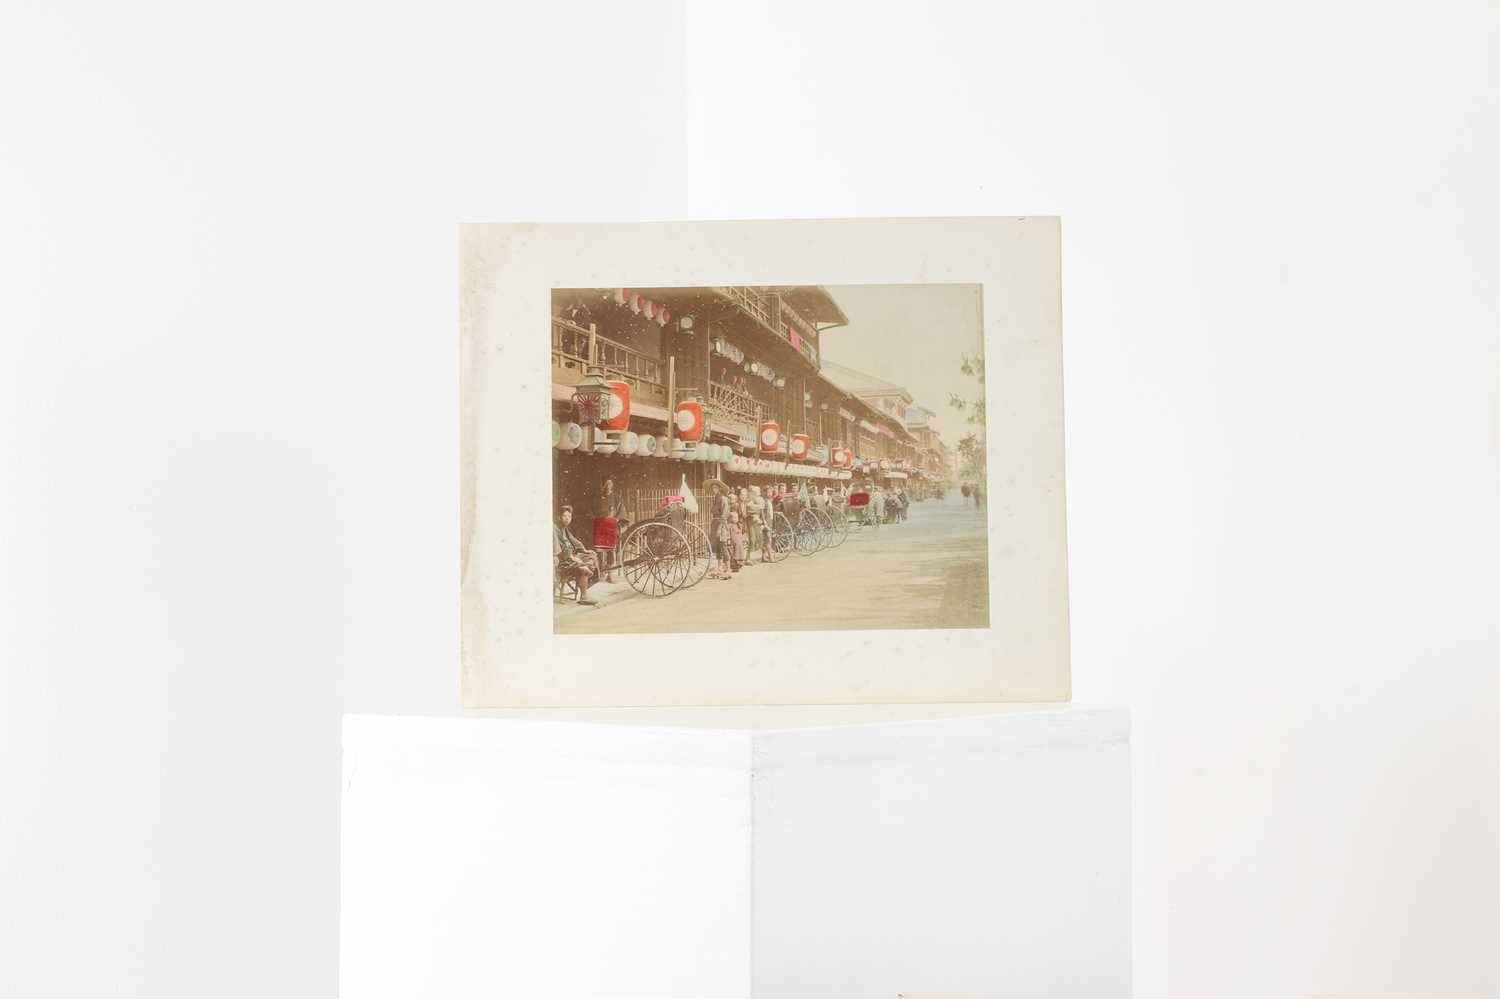 A lacquered photograph album,